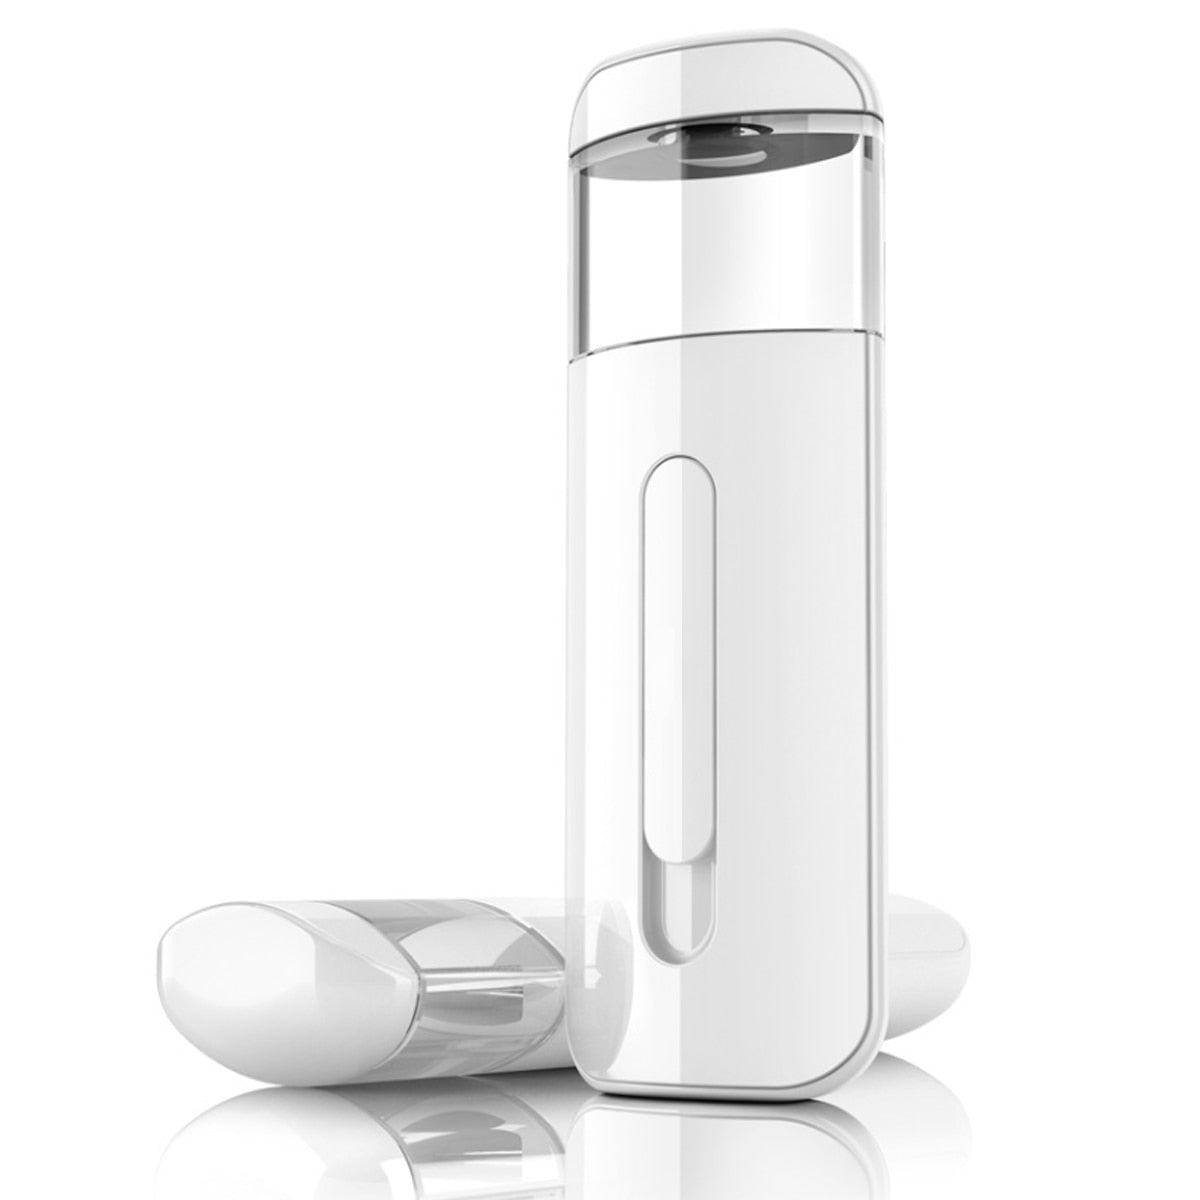 ALTHY Portable Hydrogen Water Nano Mist Generator Facial Steamer Face Moisturizing Beauty Instrument Atomization Spray Mister